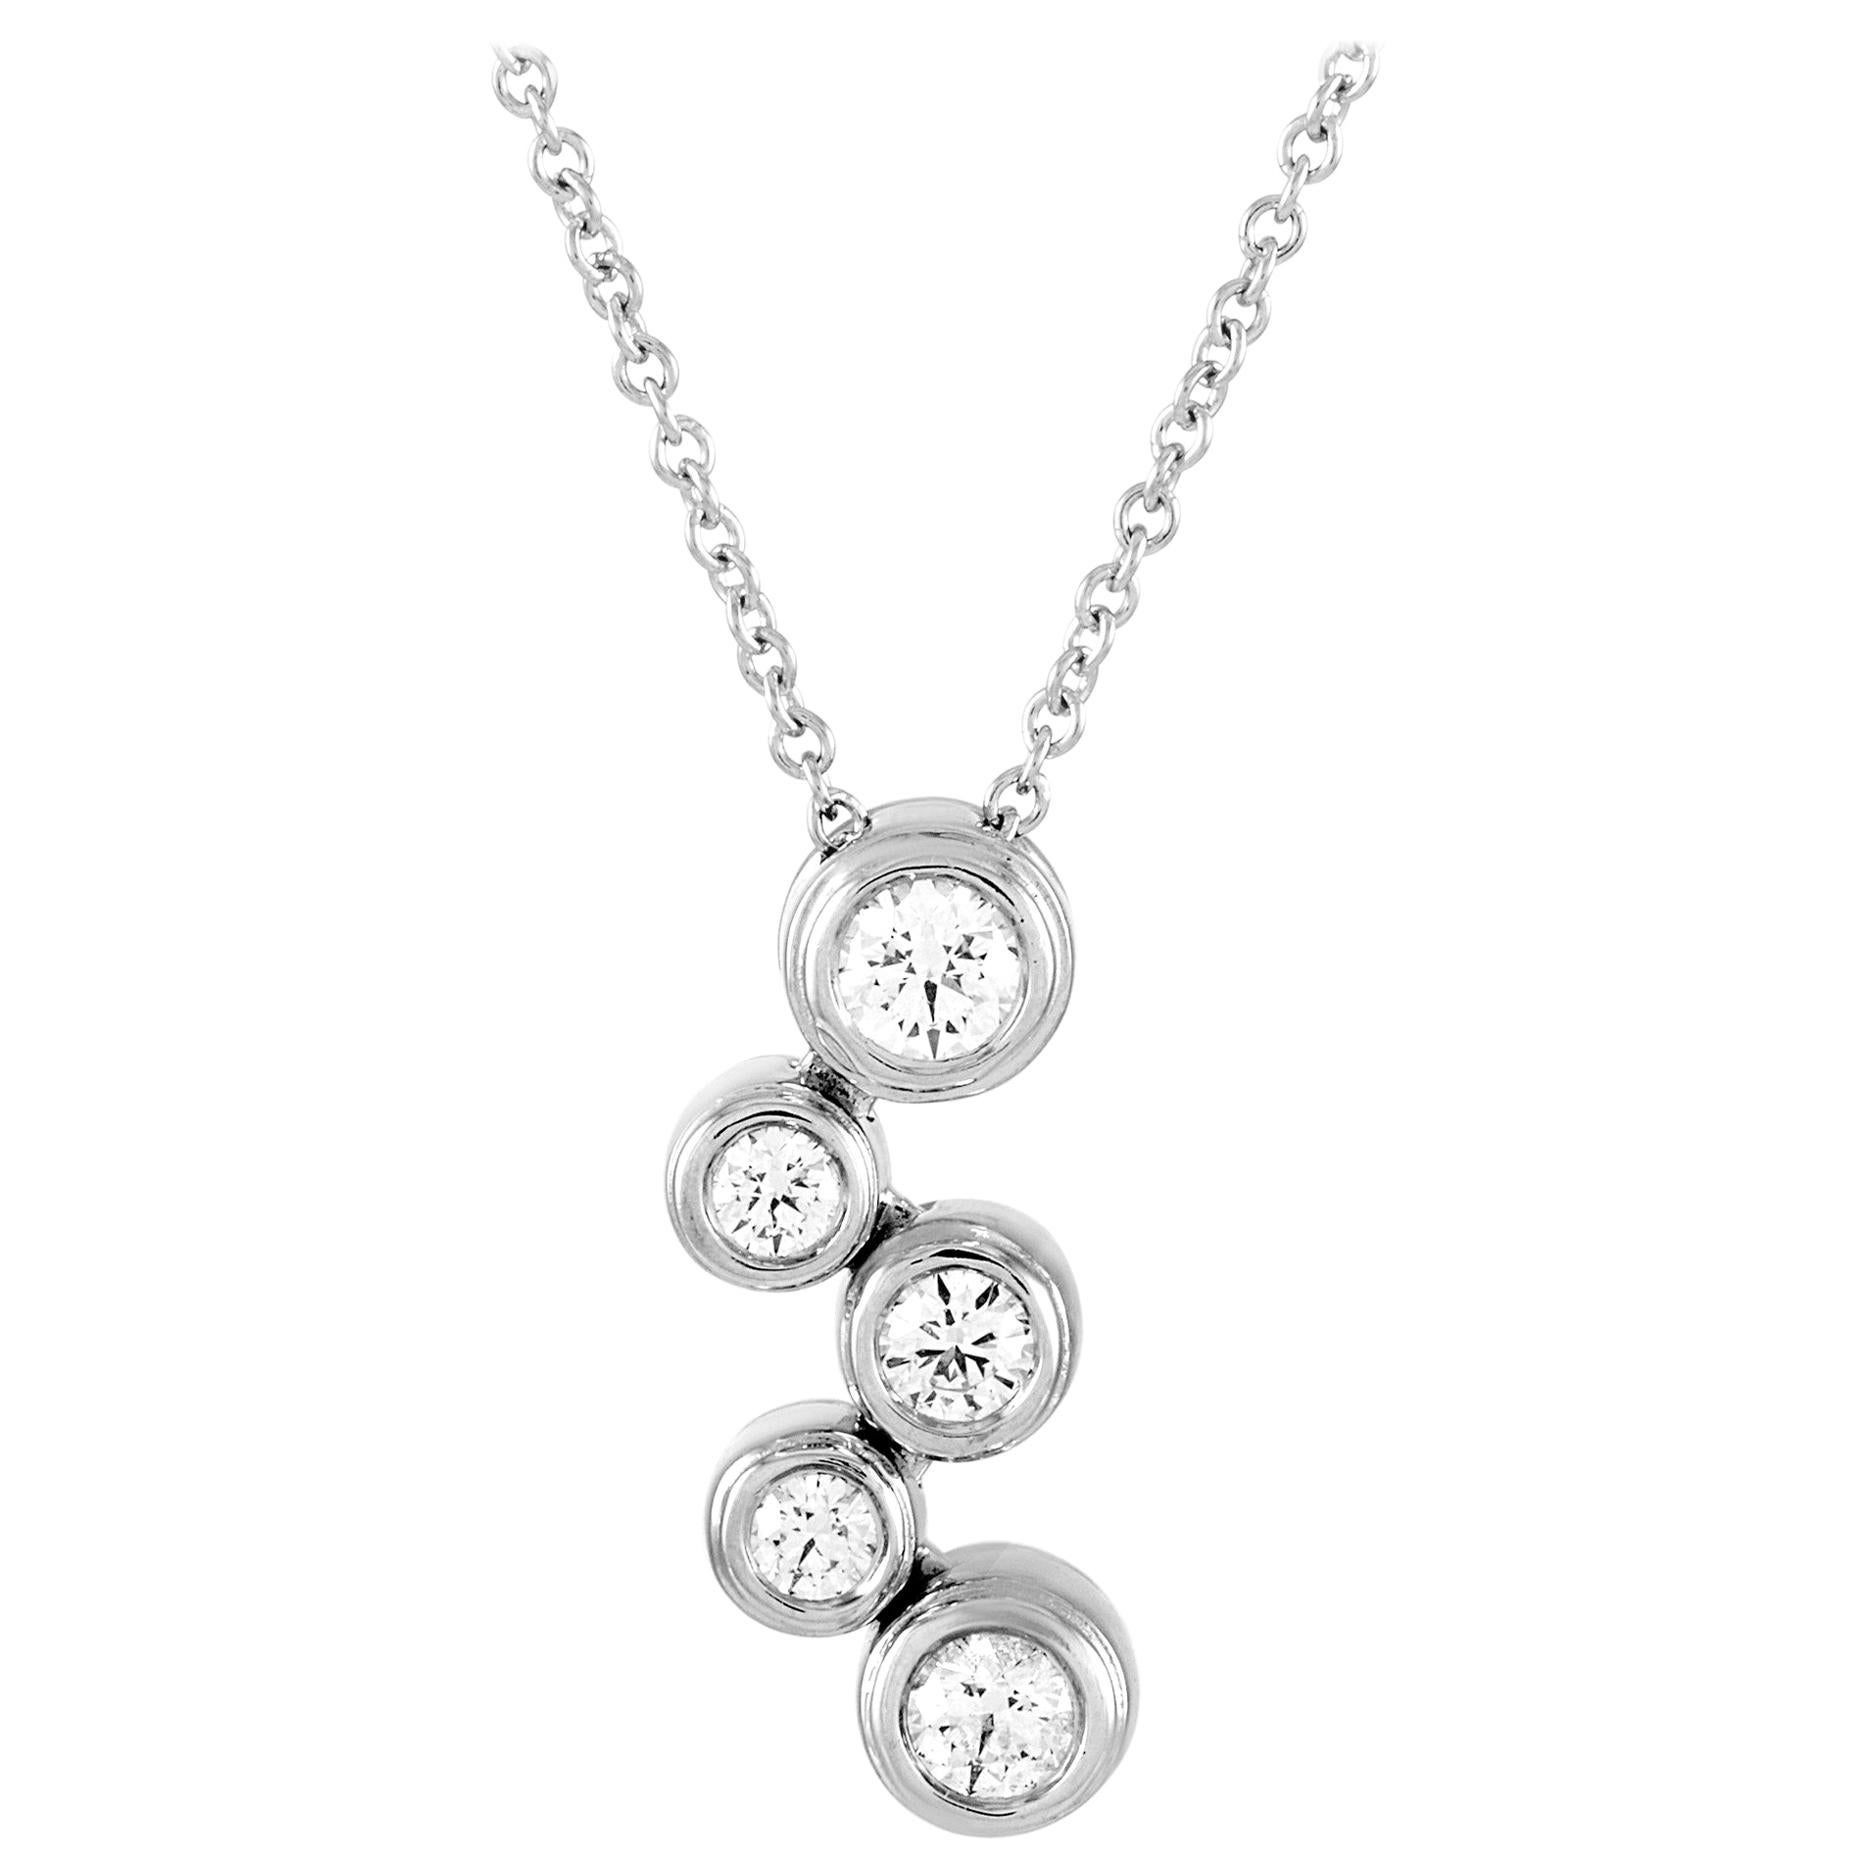 Tiffany & Co. Bubble Platinum 0.50 Carat Diamond Pendant Necklace